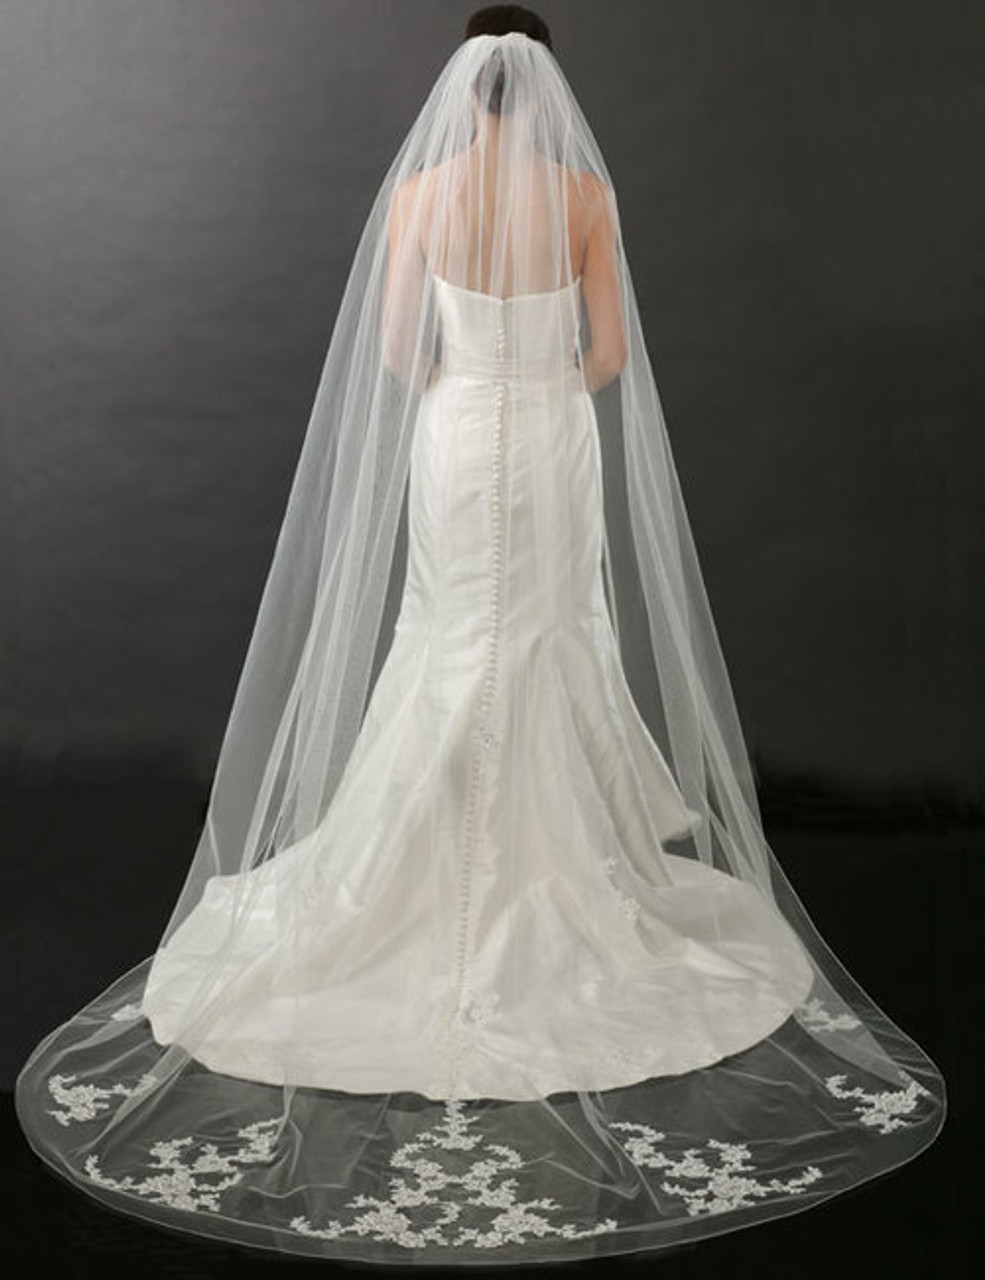 Cathedral Wedding Veil Lace Wedding Veil Lace Trim Bridal Veil 1